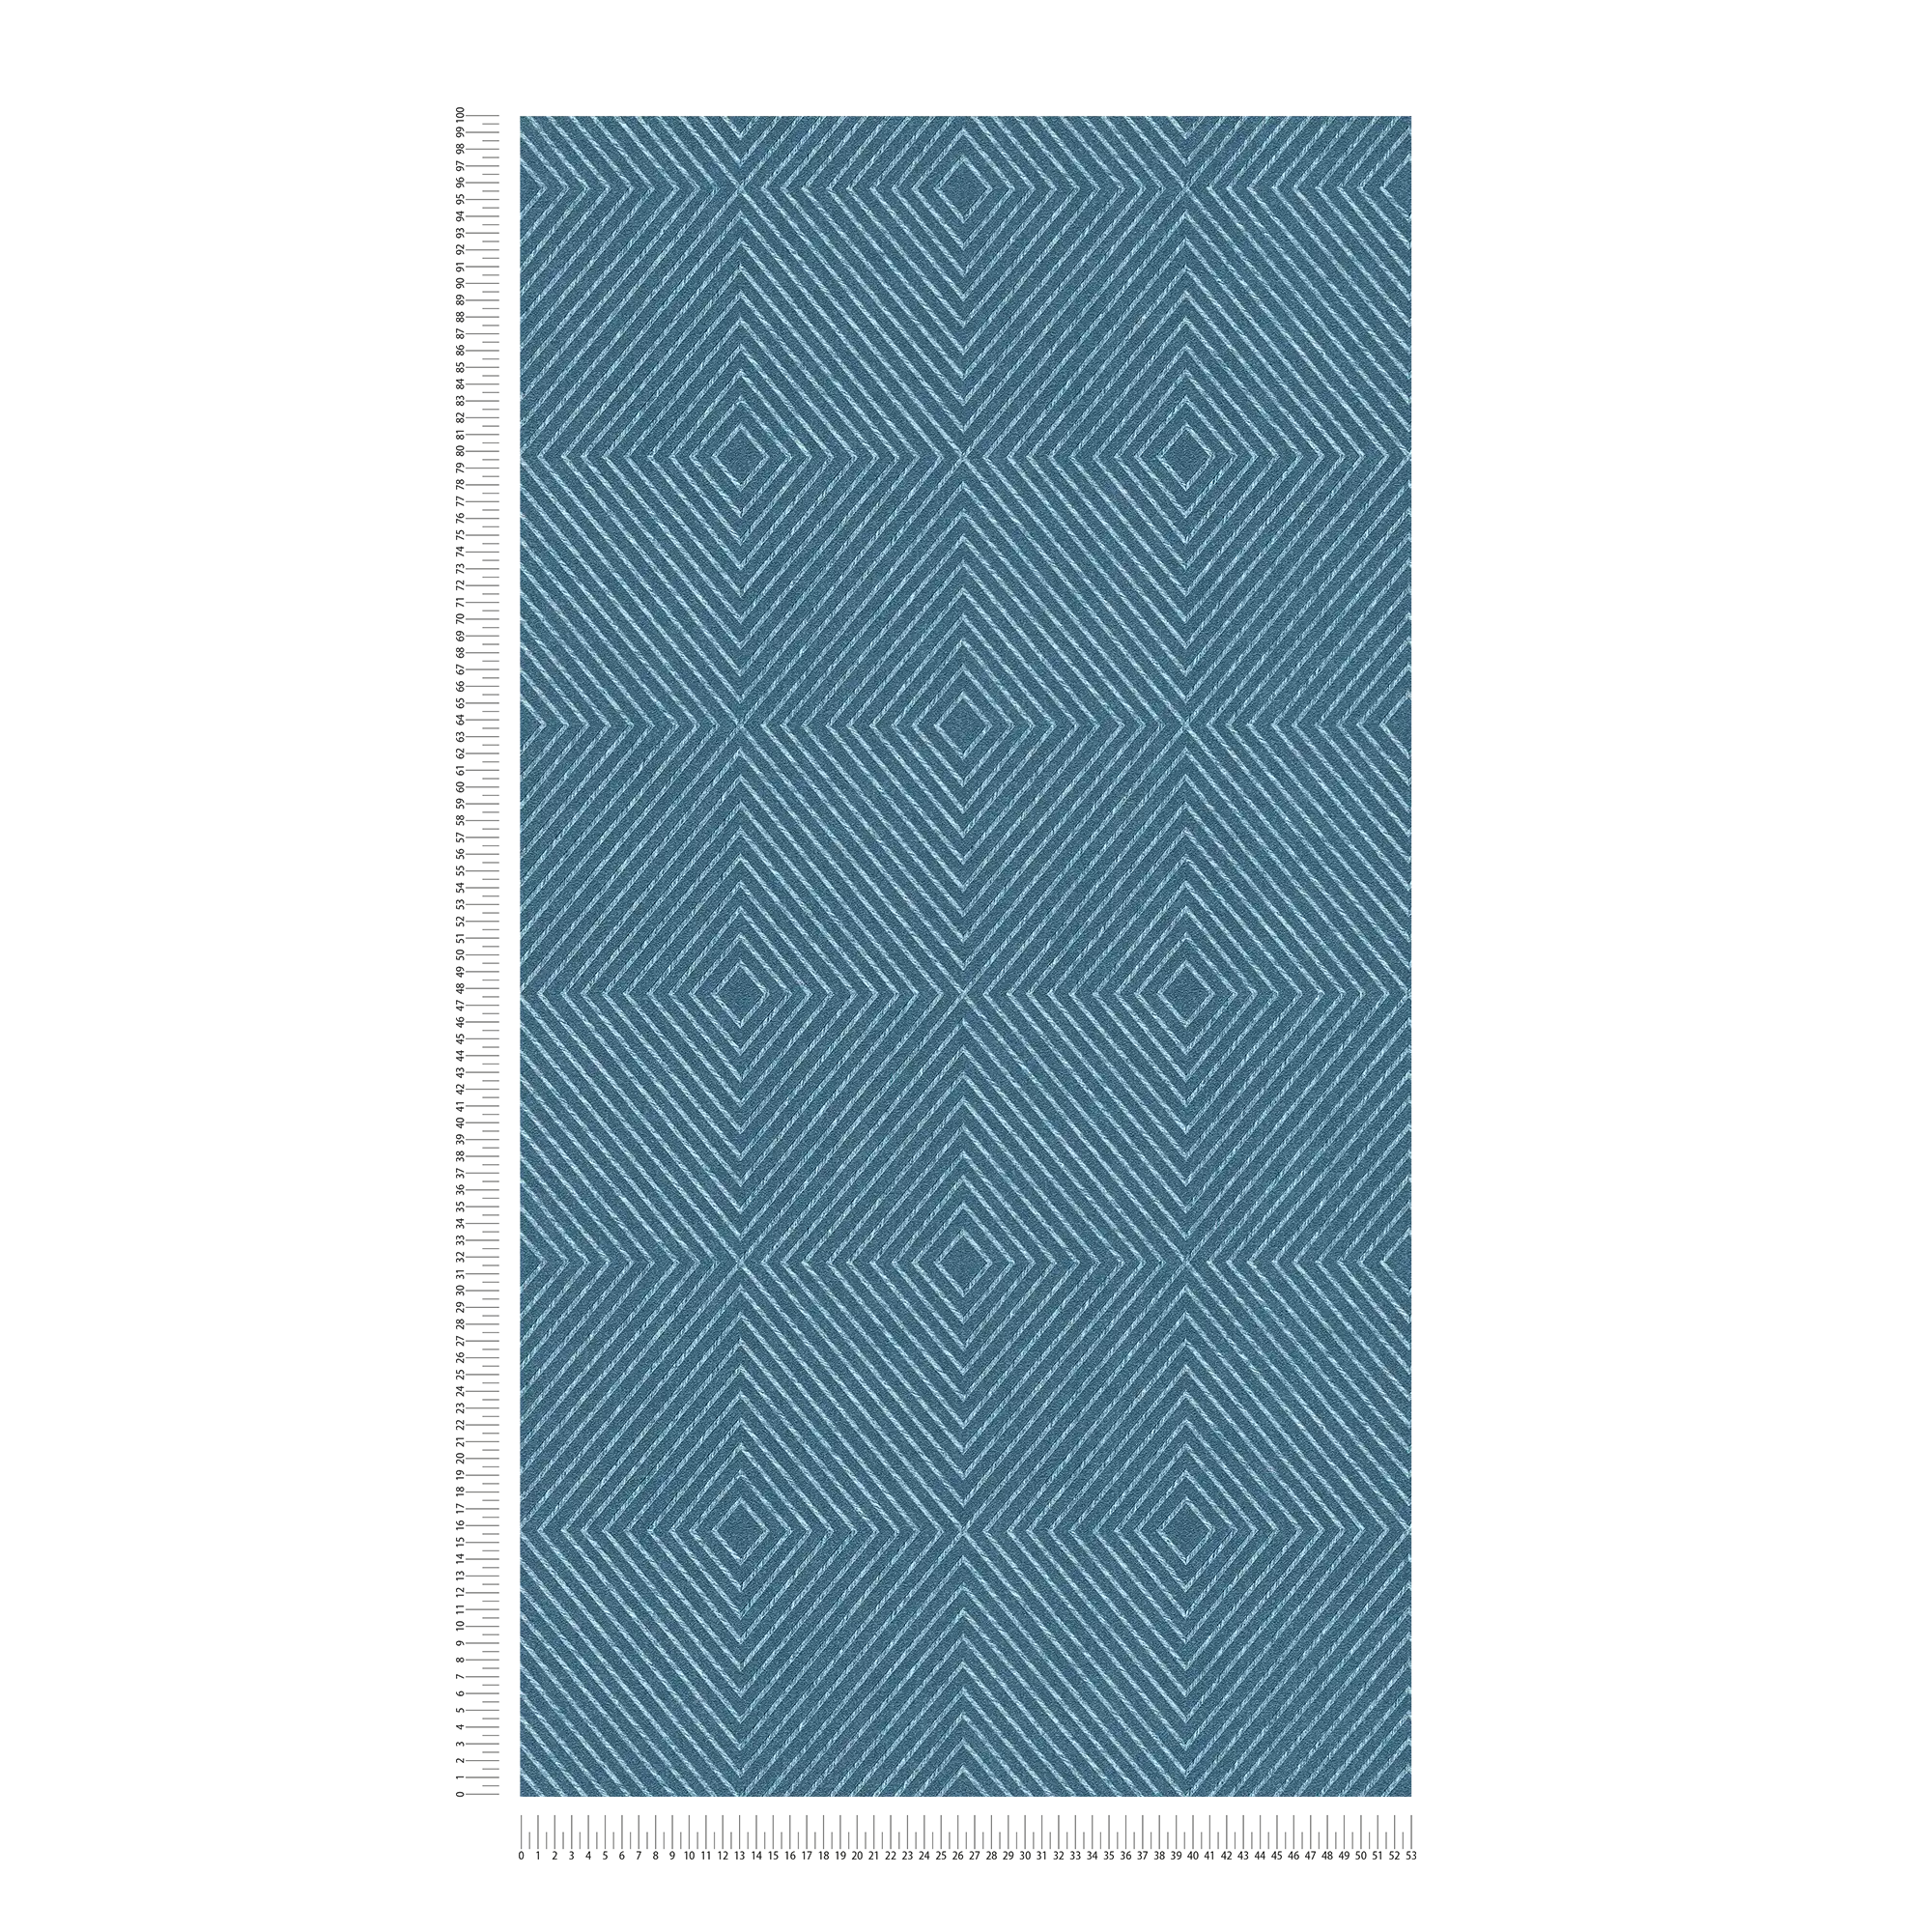             Papel pintado de diseño gráfico, estilo escandinavo - azul, plata
        